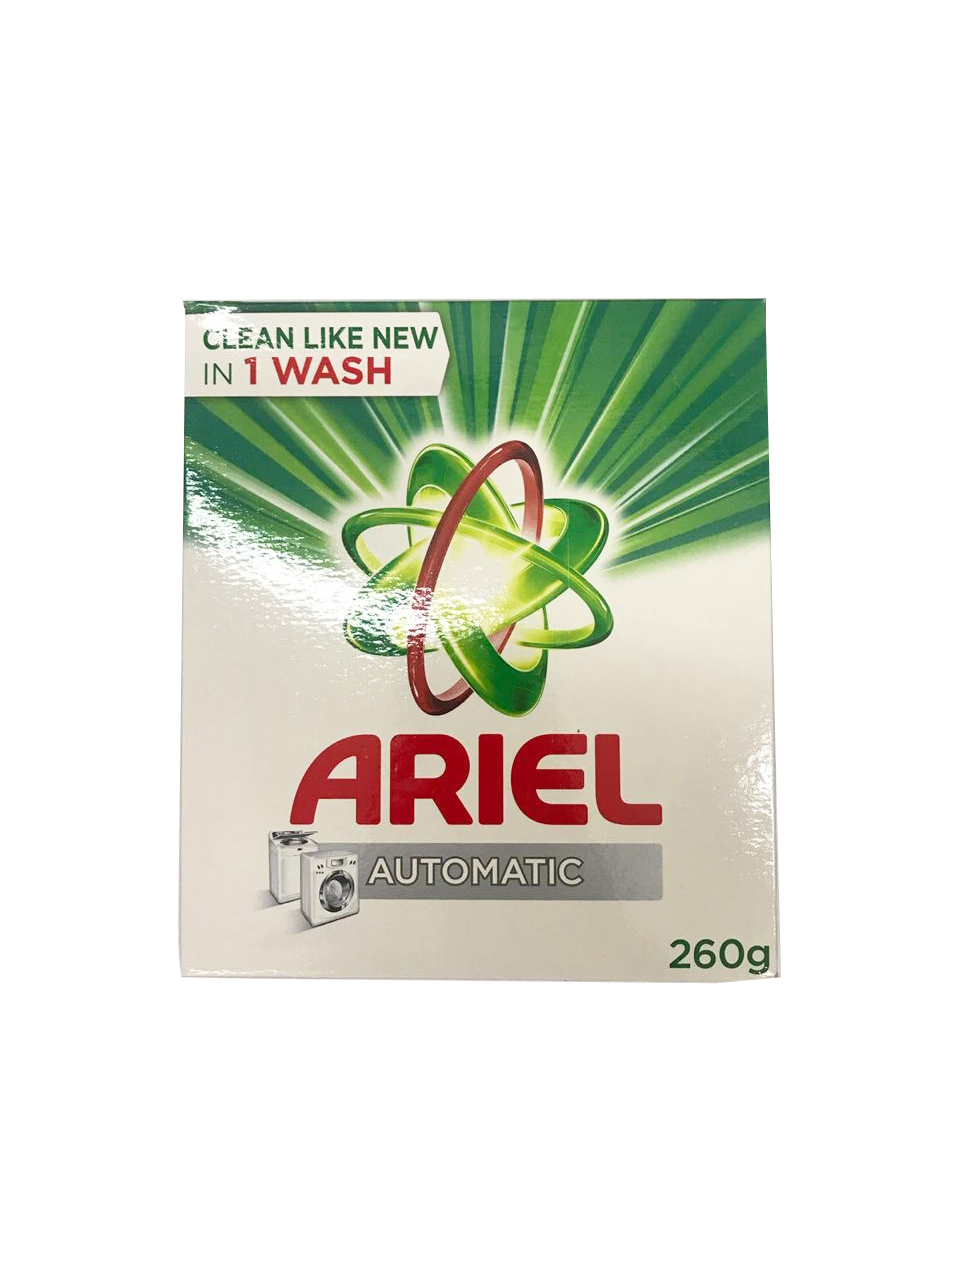 Ariel Automatic 260g (Green)